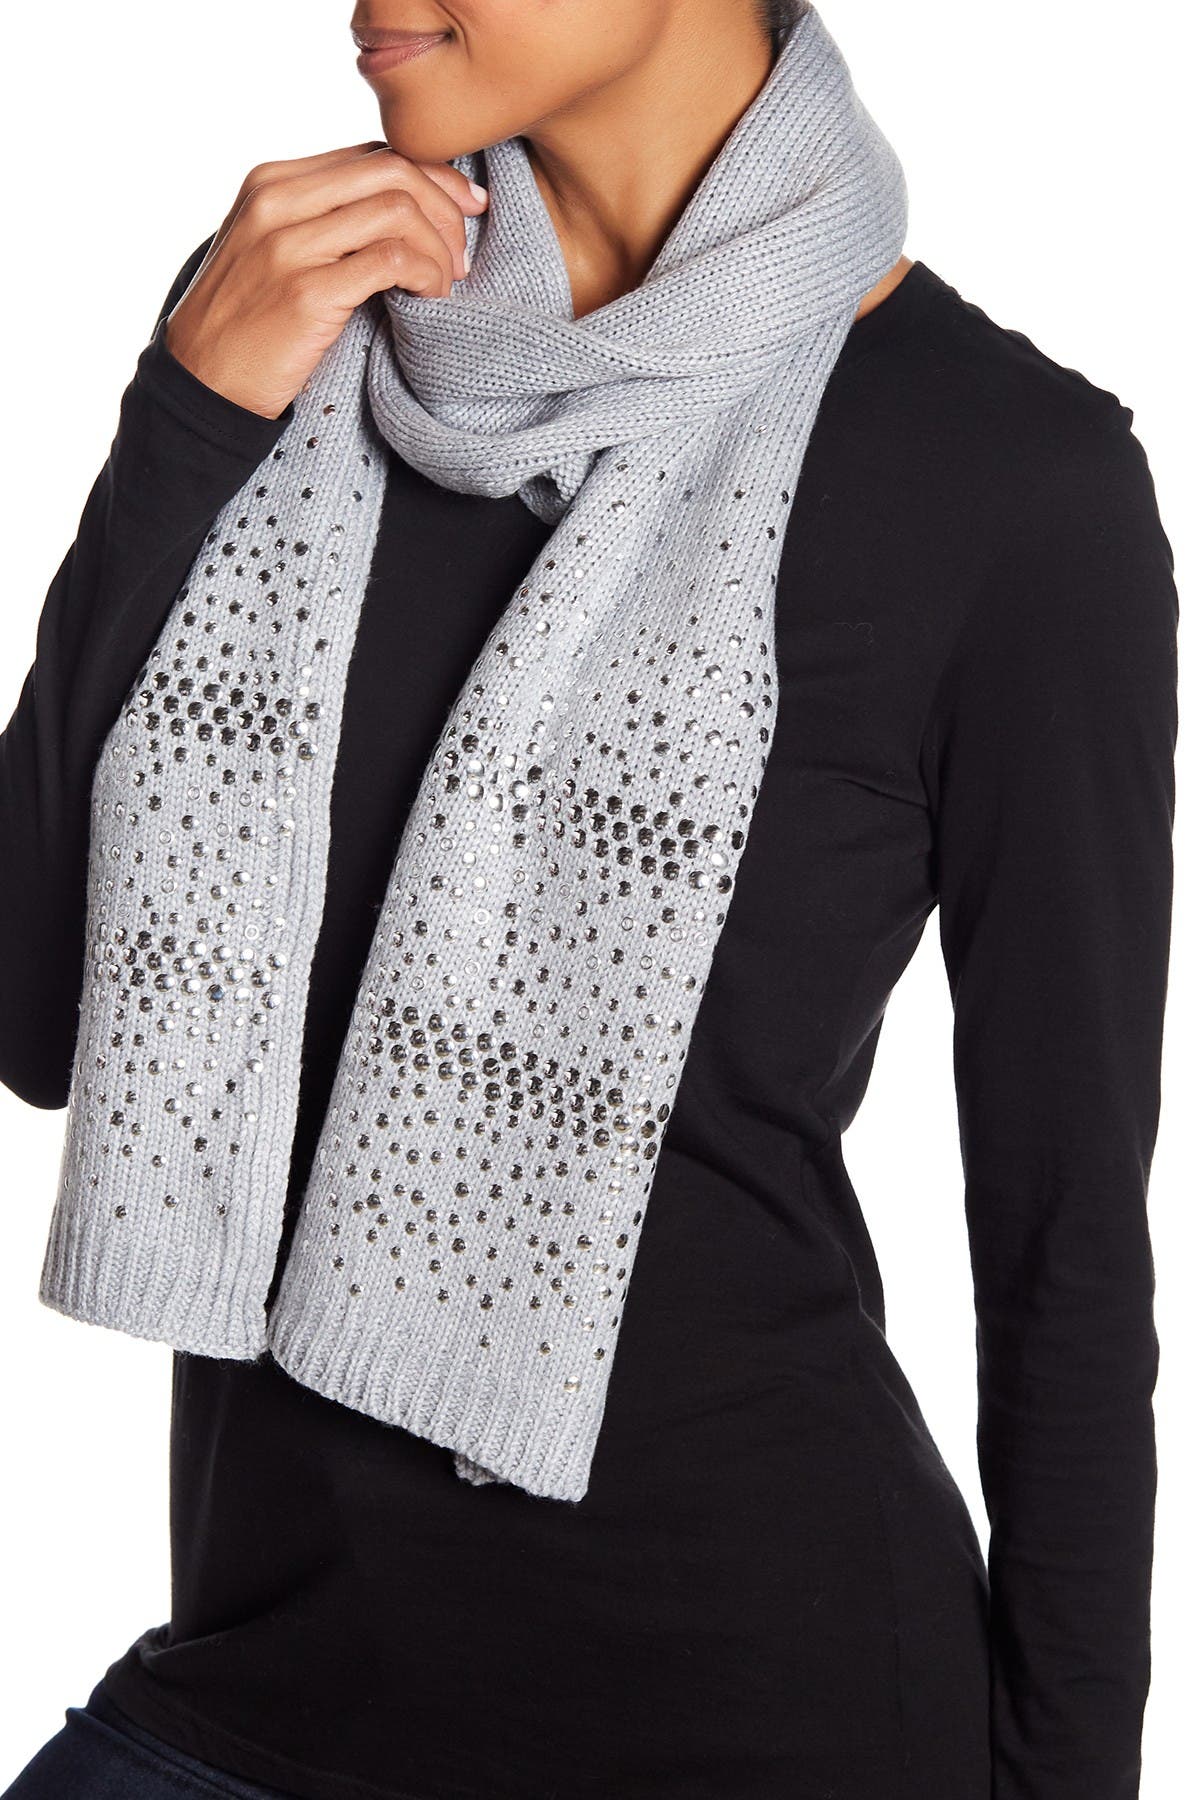 Michael Kors | Studded Knit Scarf 